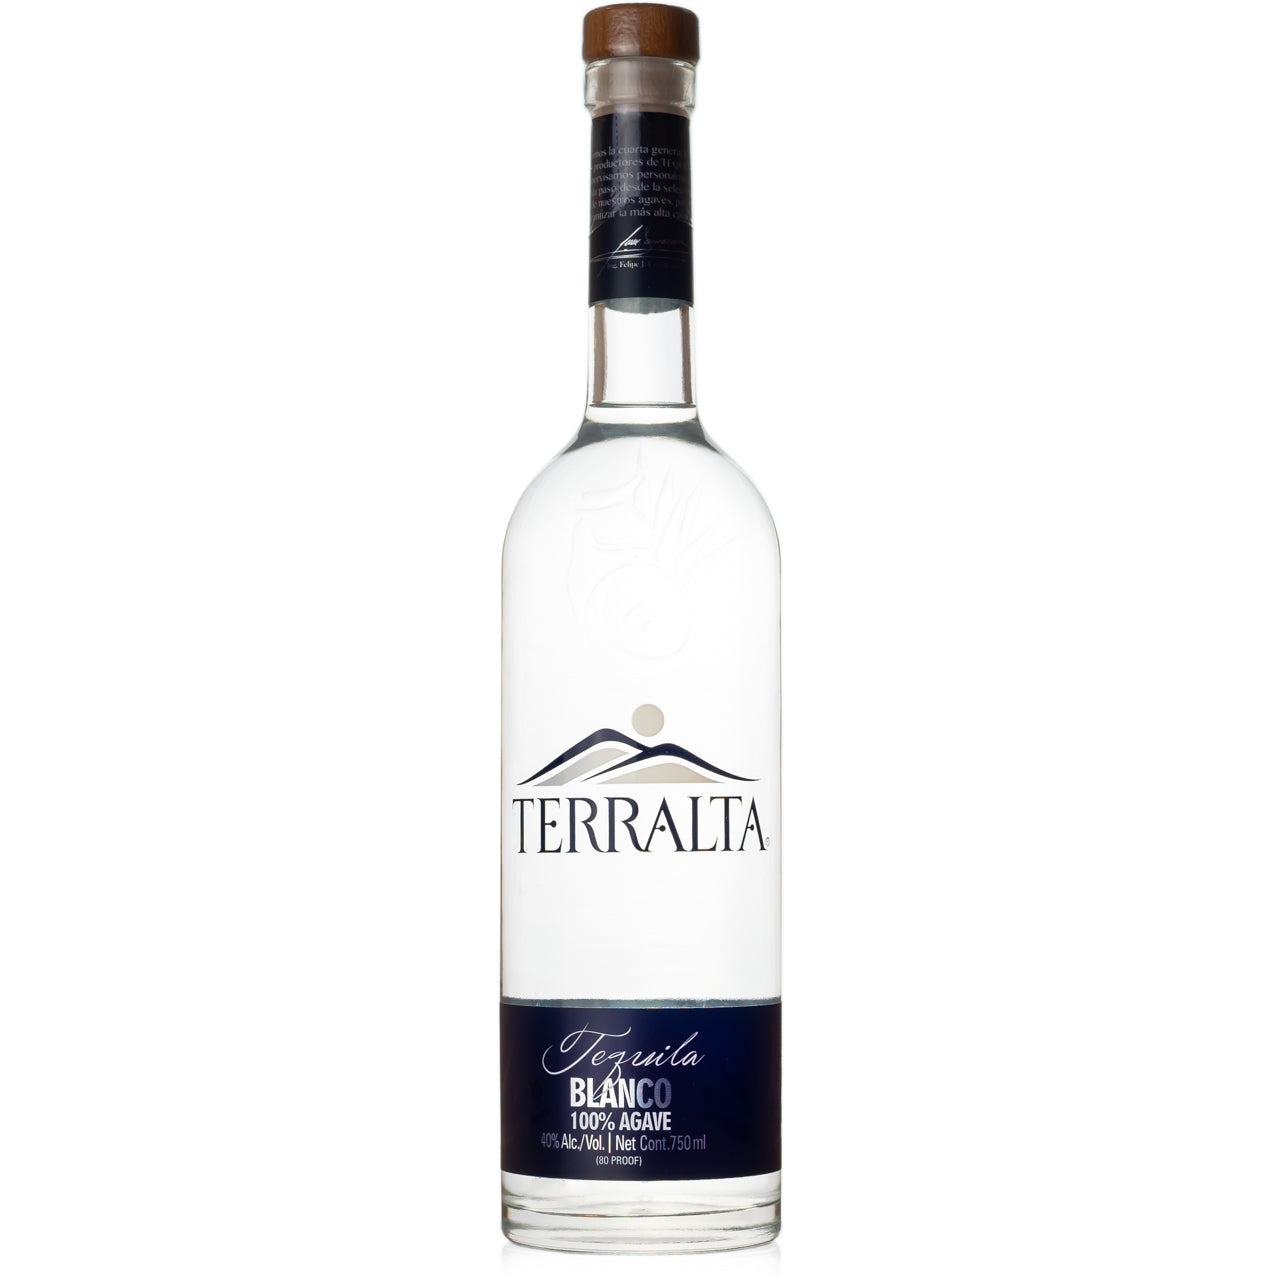 Terralta Blanco Tequila